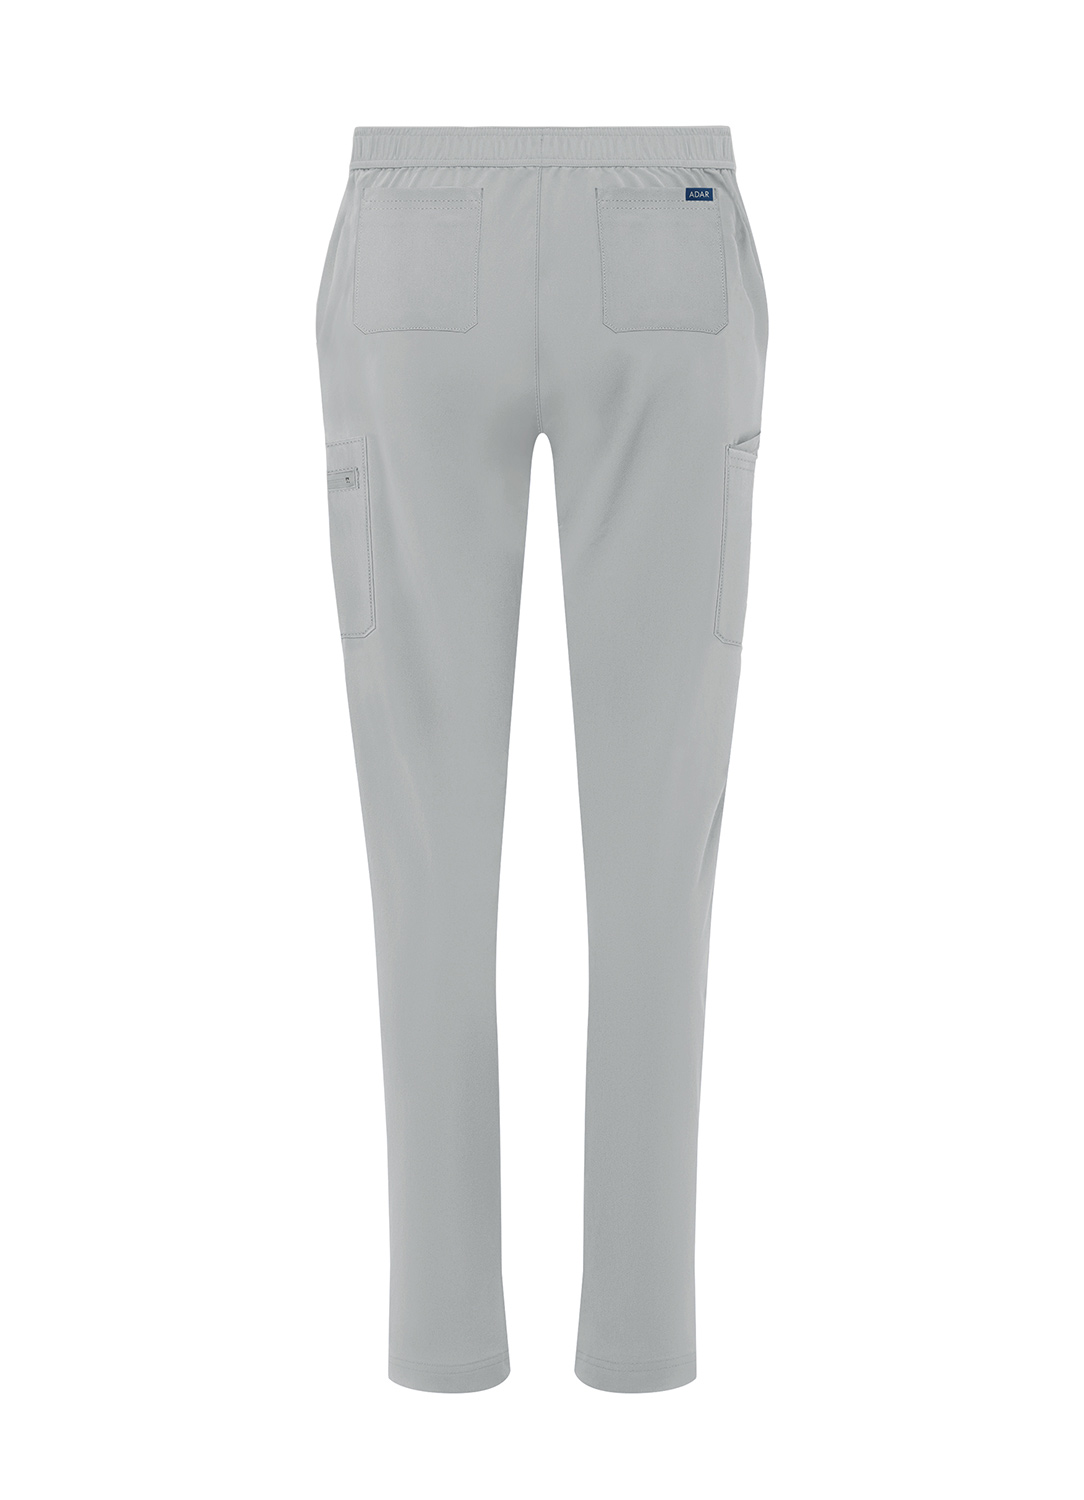 Women’s Adar Uniforms Skinny Leg Cargo scrub trousers silver gray-9